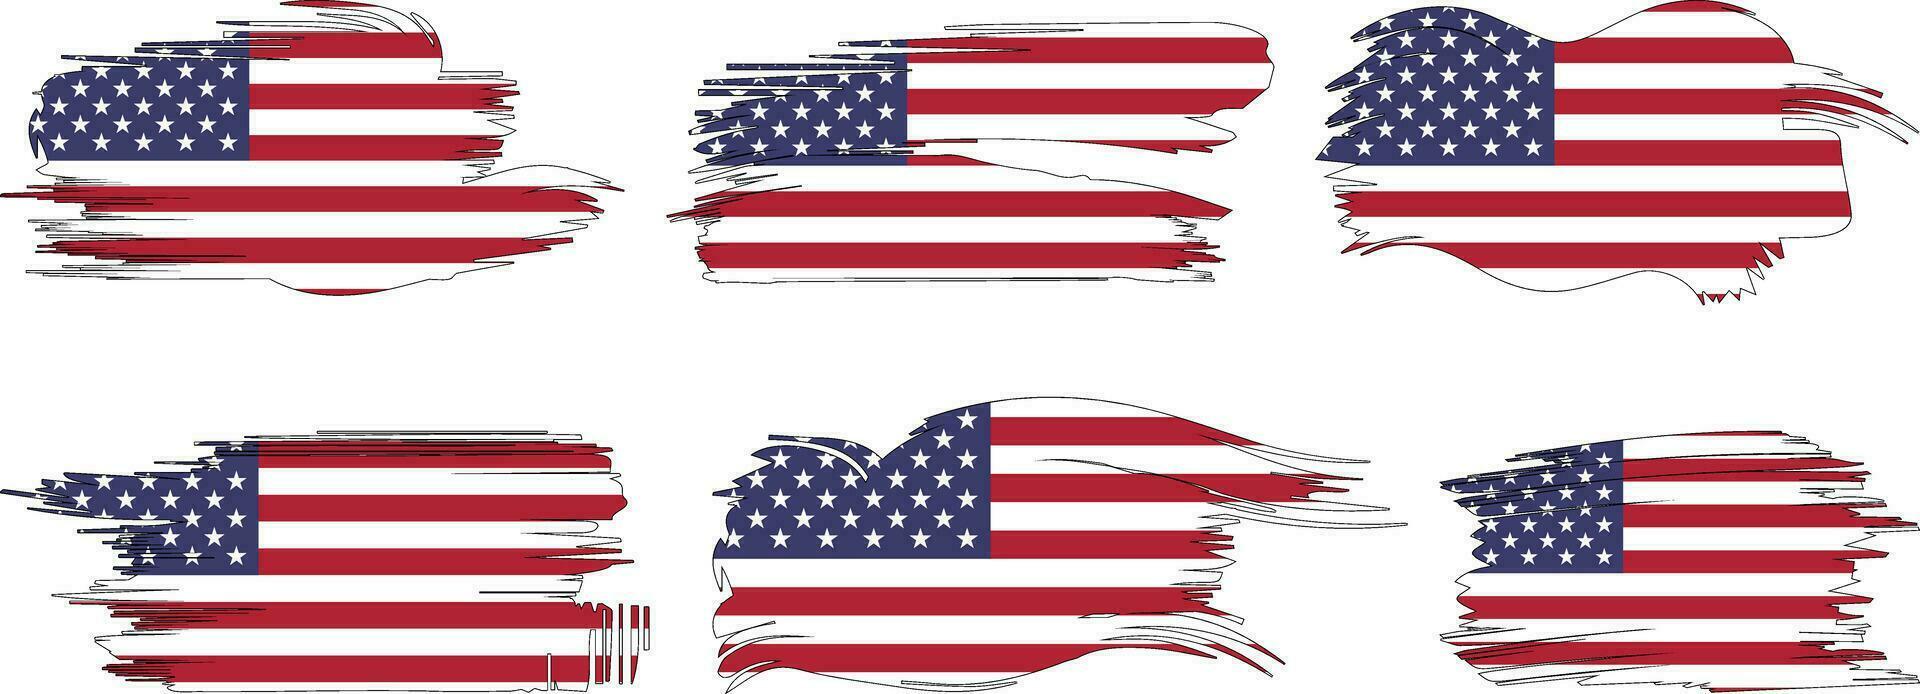 amerikanisch Flagge Silhouette, Grunge USA Flagge einstellen Vektor, Grunge, Flagge, Silhouette, Unabhängigkeit, Juli, 4 .. von Juli, 4 .. Juli, Flagge Silhouette vektor